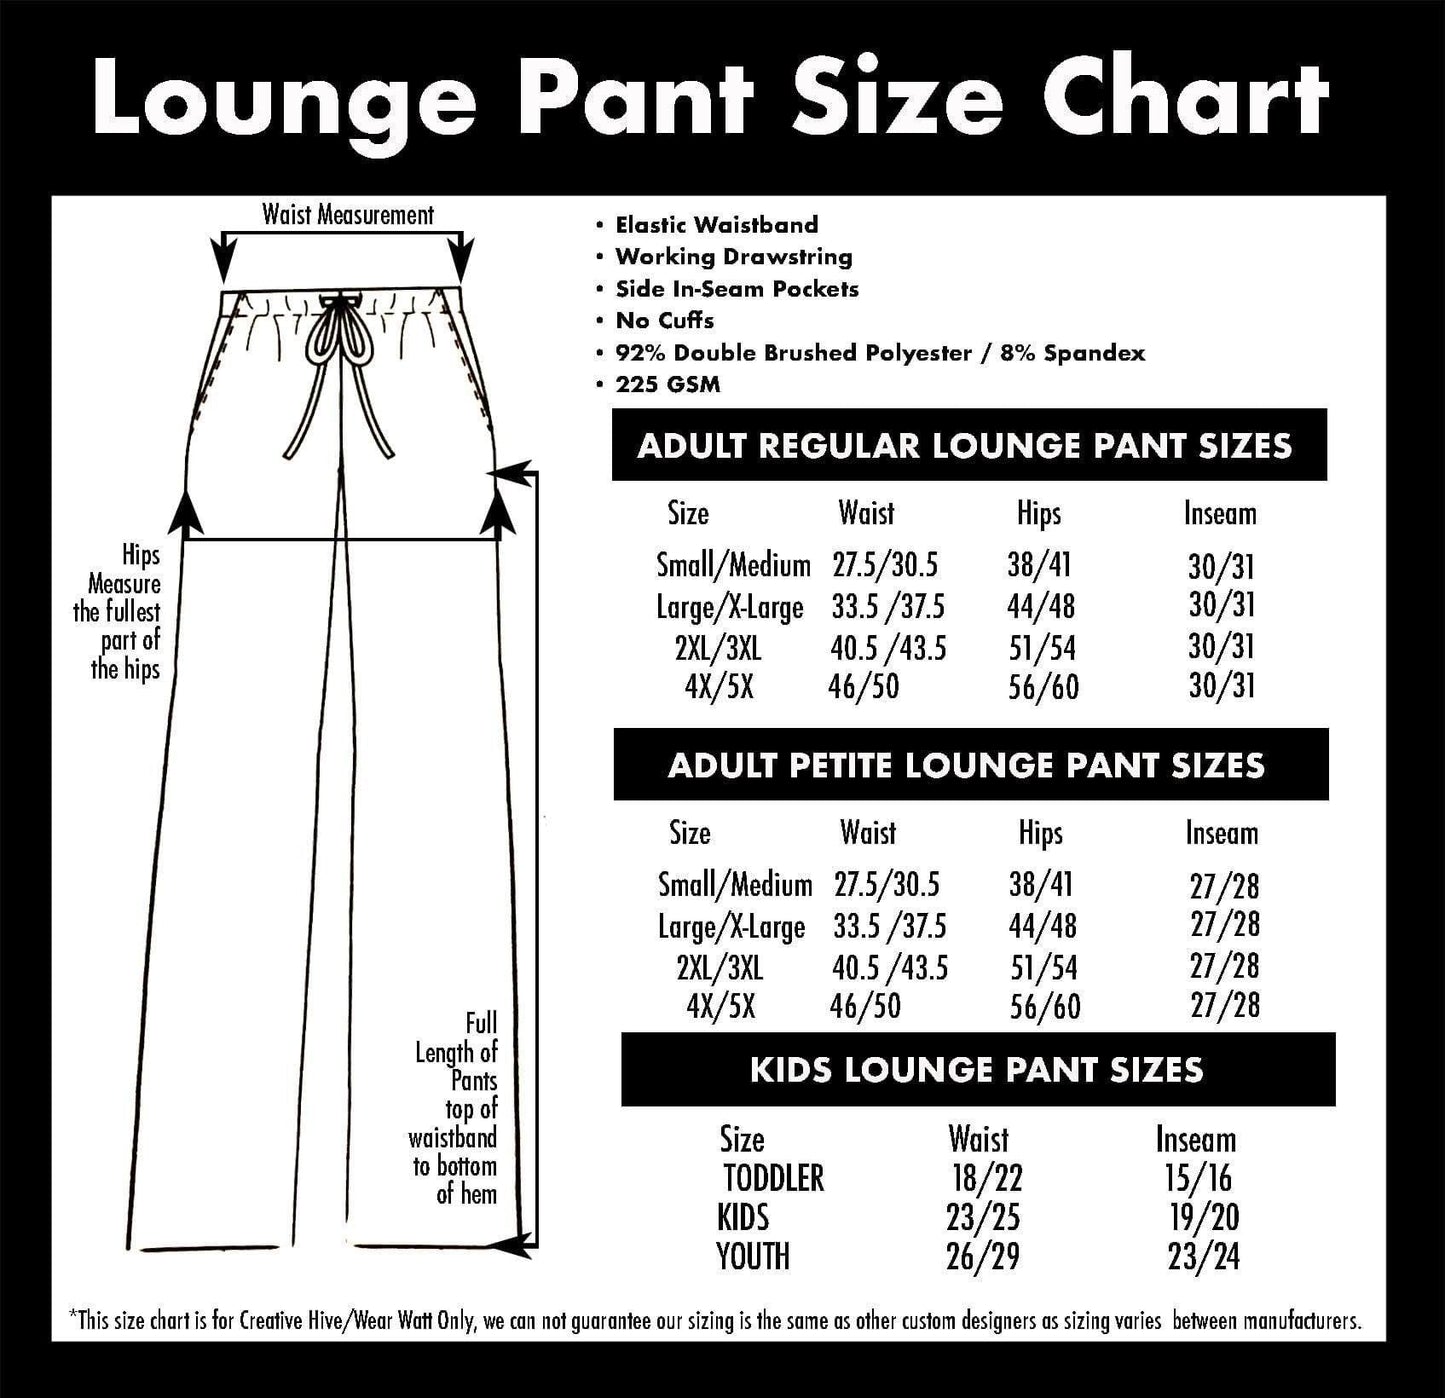 Pink & Black Brushstrokes Lounge Pants - That’s So Fletch Boutique 